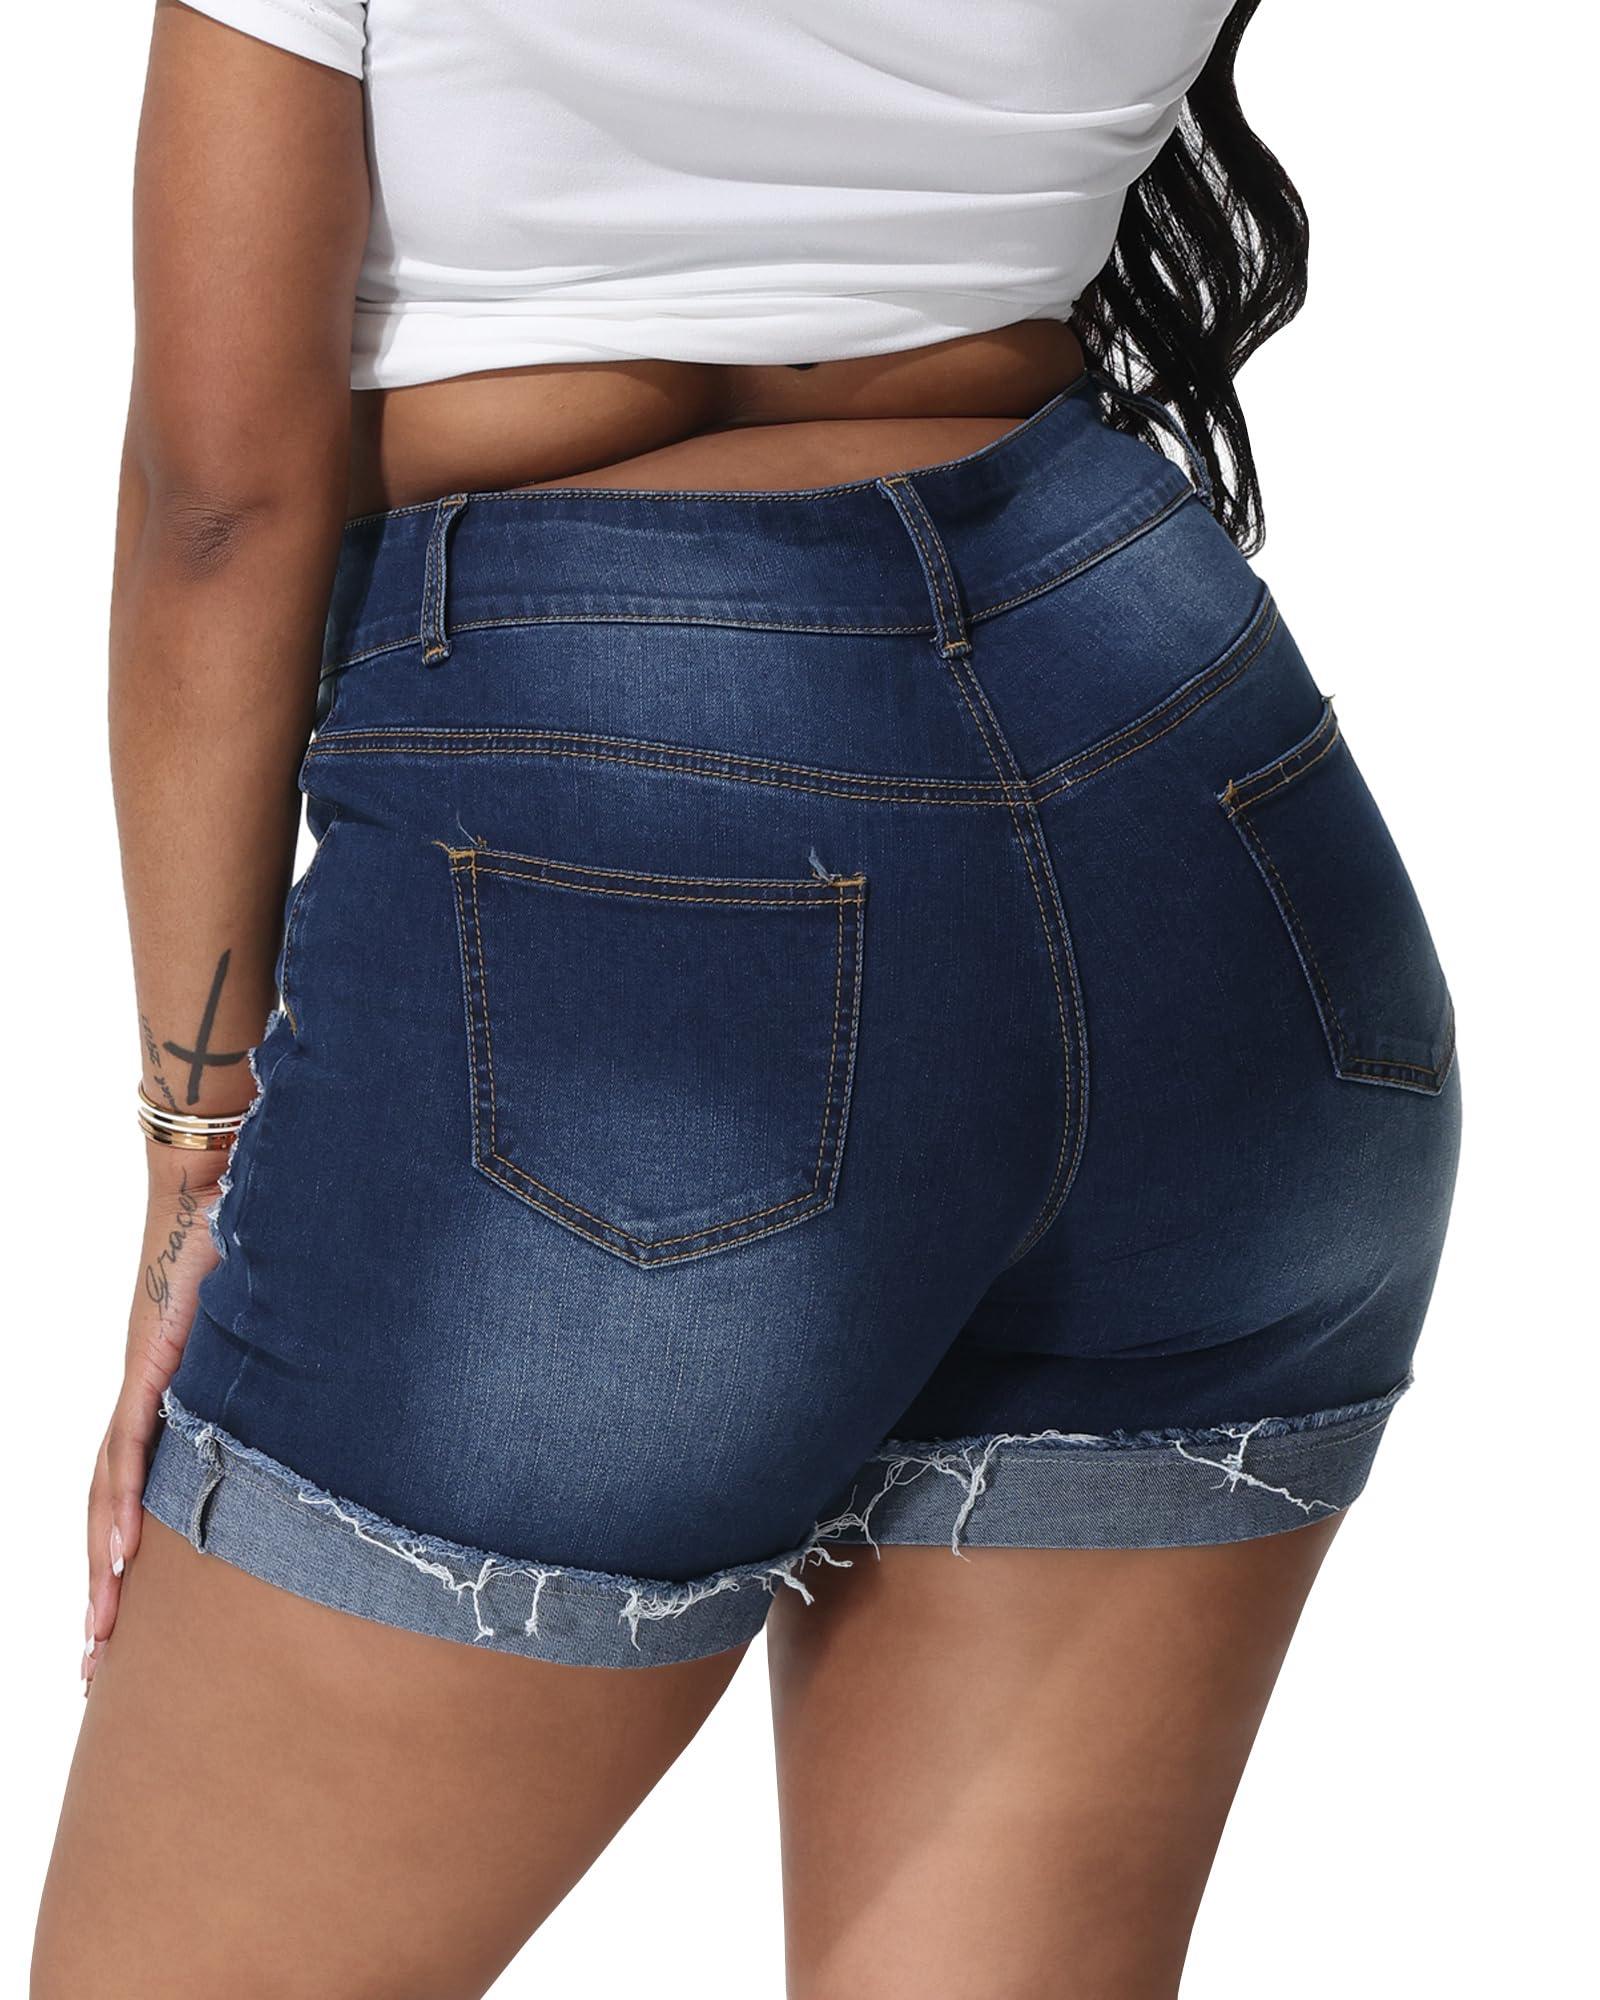 Rubugil Plus Size Denim Shorts Women High Waisted Distressed Jean Shorts Casual Ripped Raw Fold Hem Short Jeans #3 Dark Blue 26W - Bona Fide Fashion